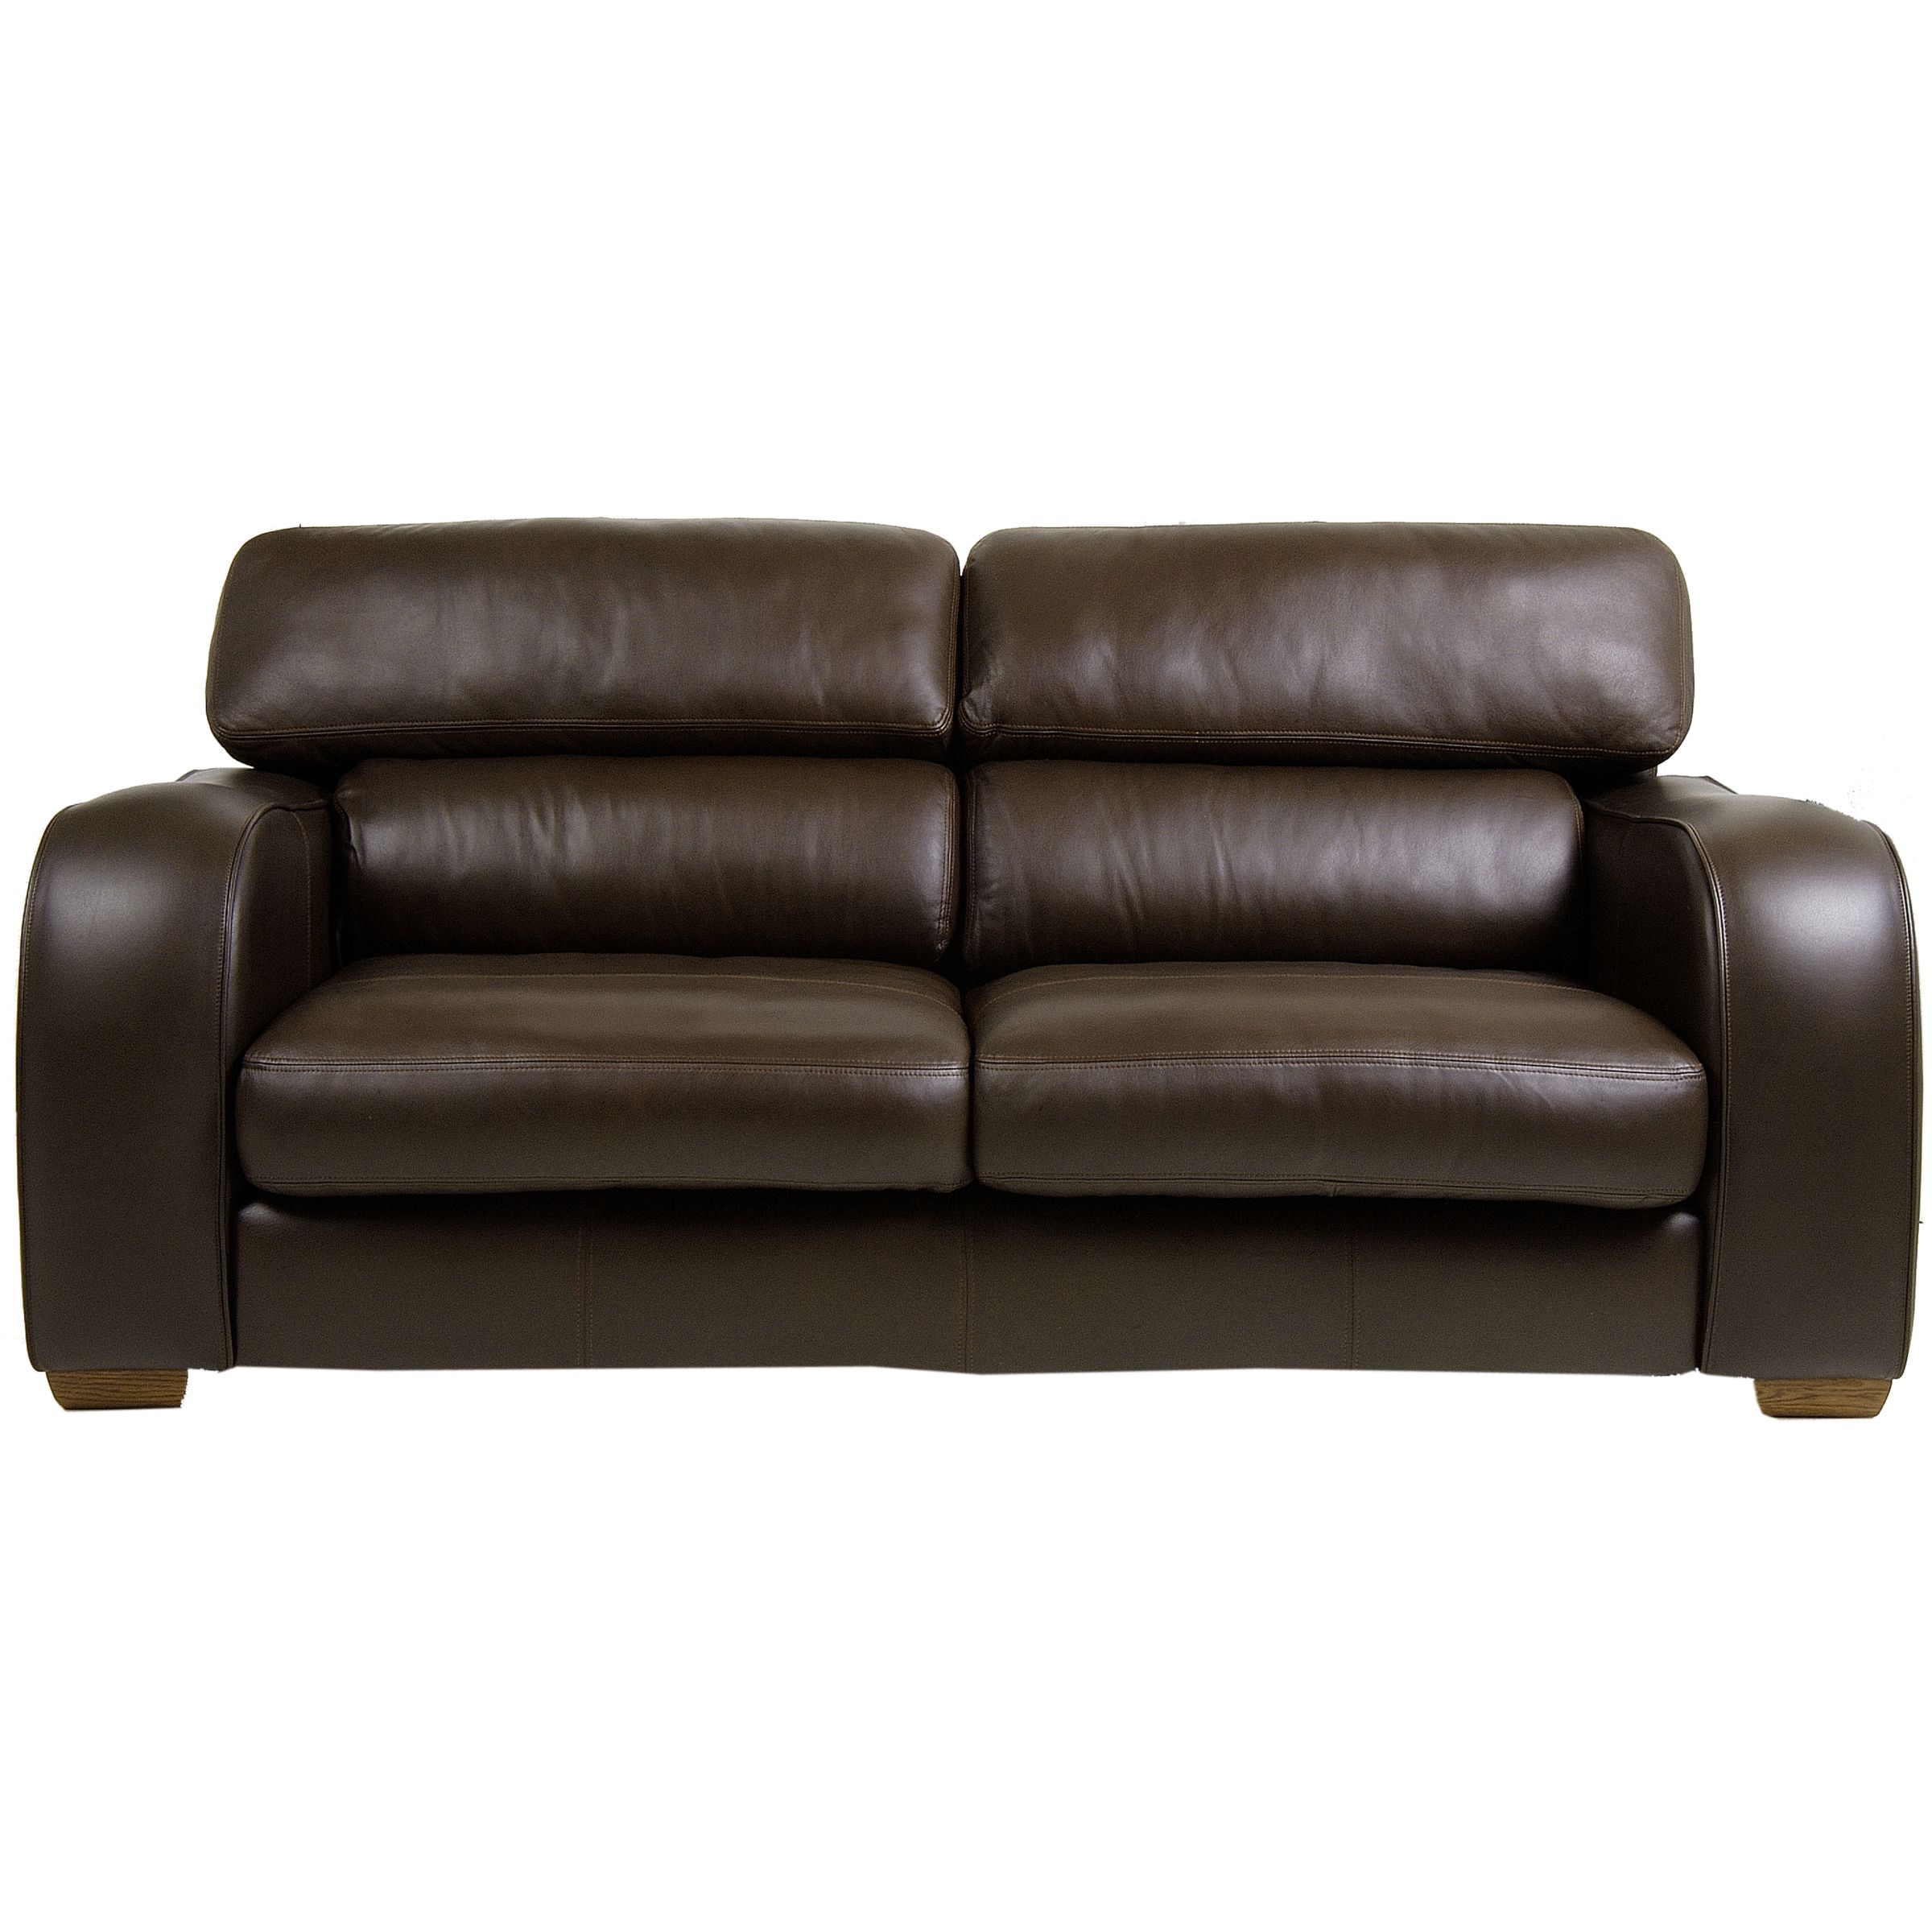 John Lewis Granada Large Leather Sofa, Dark